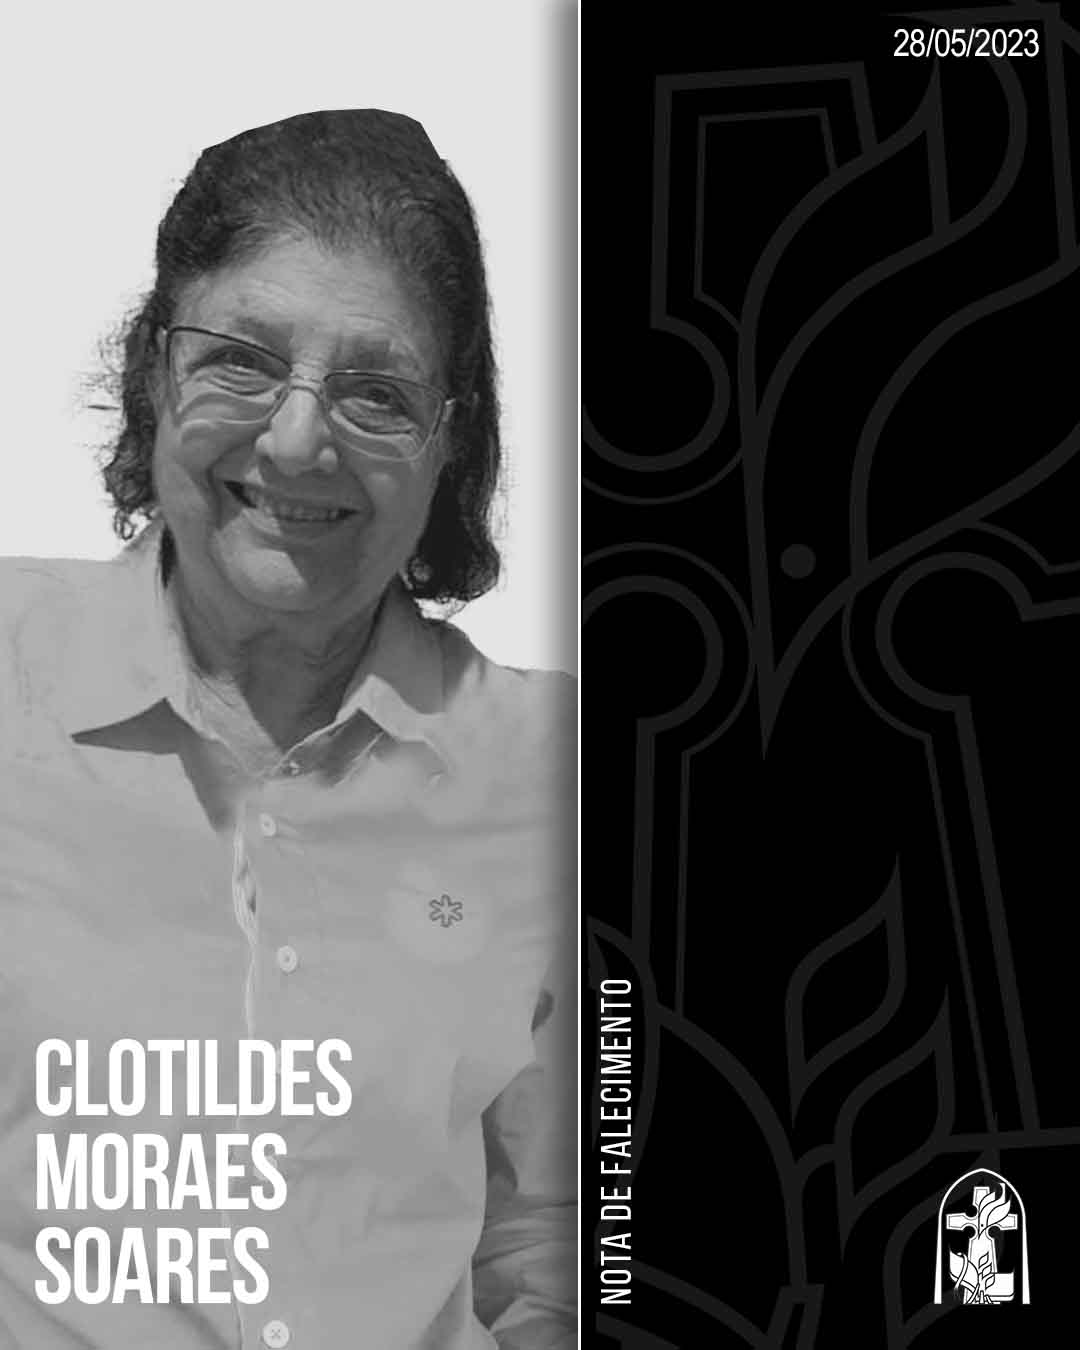 Clotildes Moraes Soares